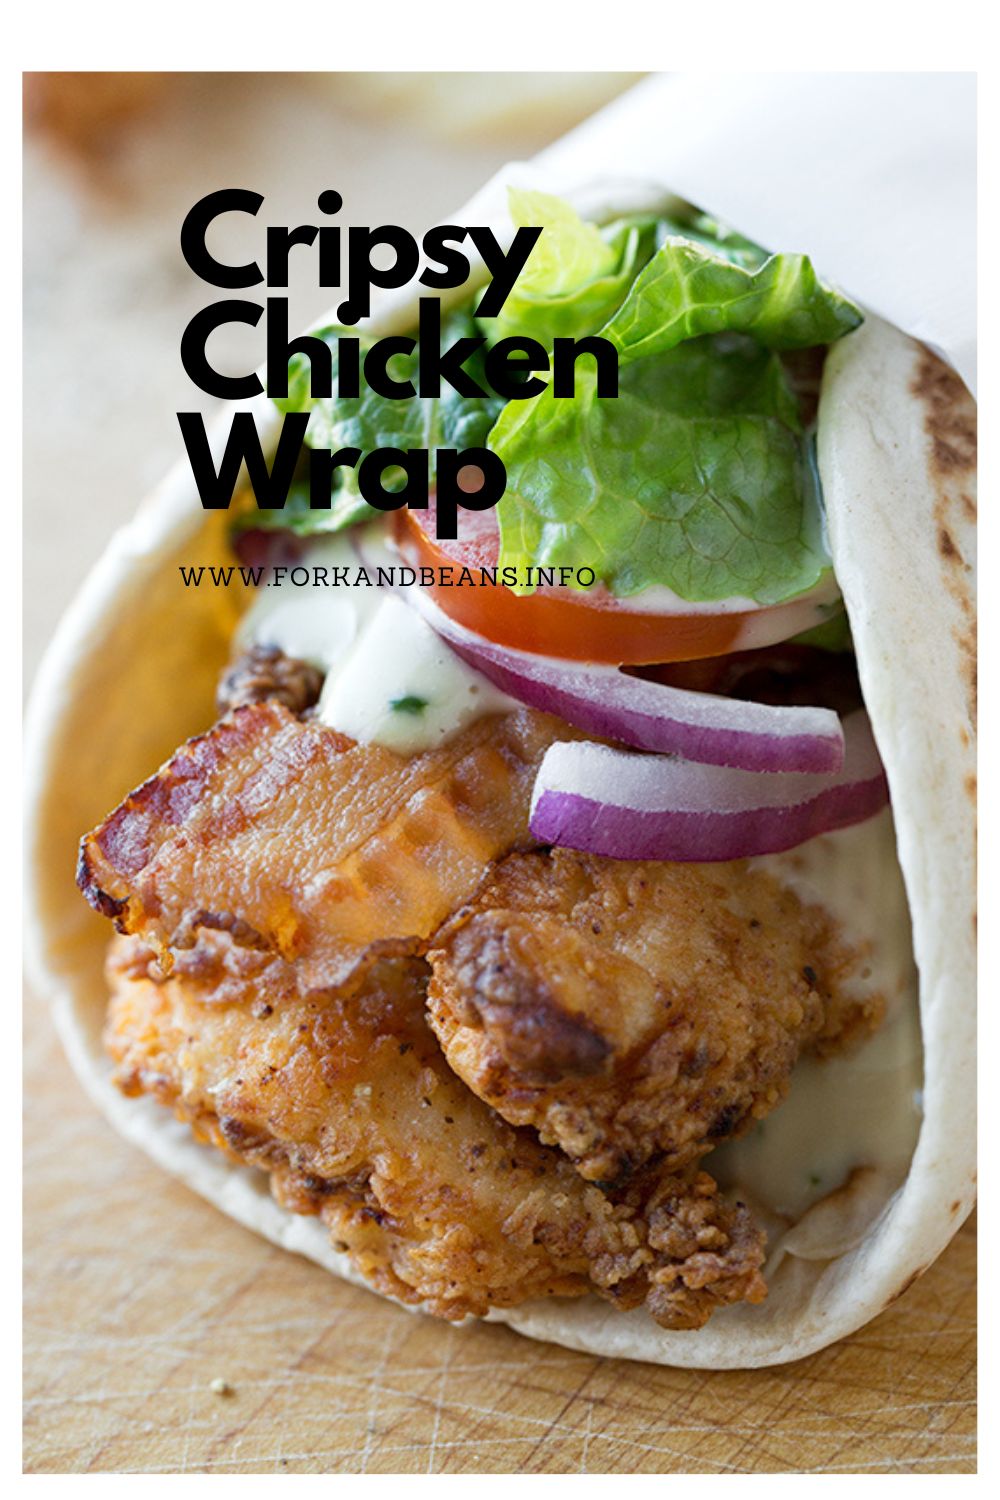 Crispy Chicken Wrap